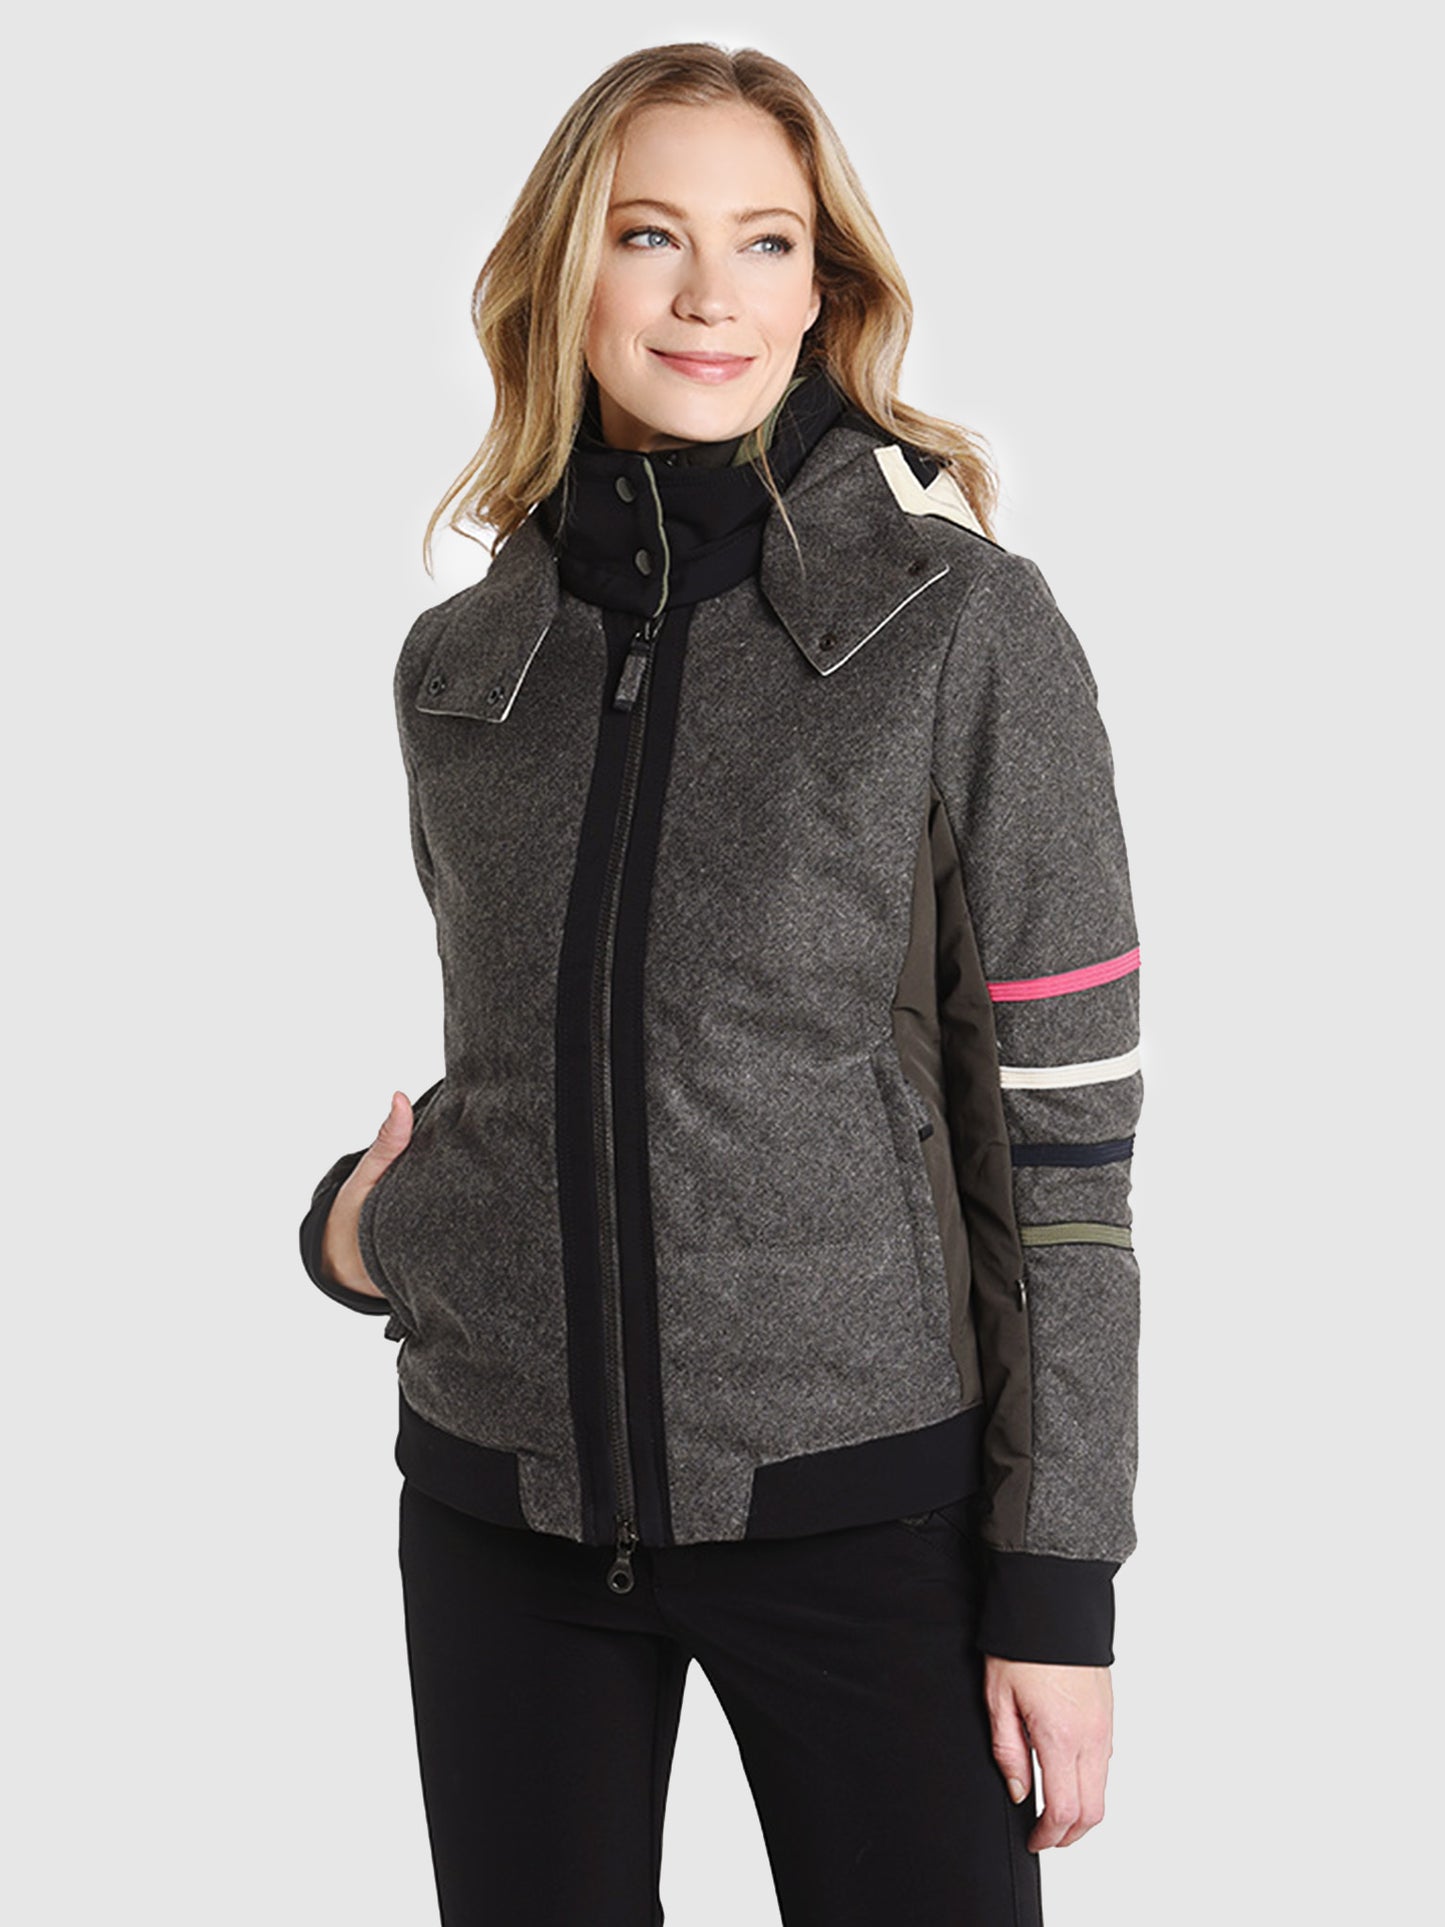 Frauenschuh Women's Lizzy Multi Stripe Ski Jacket